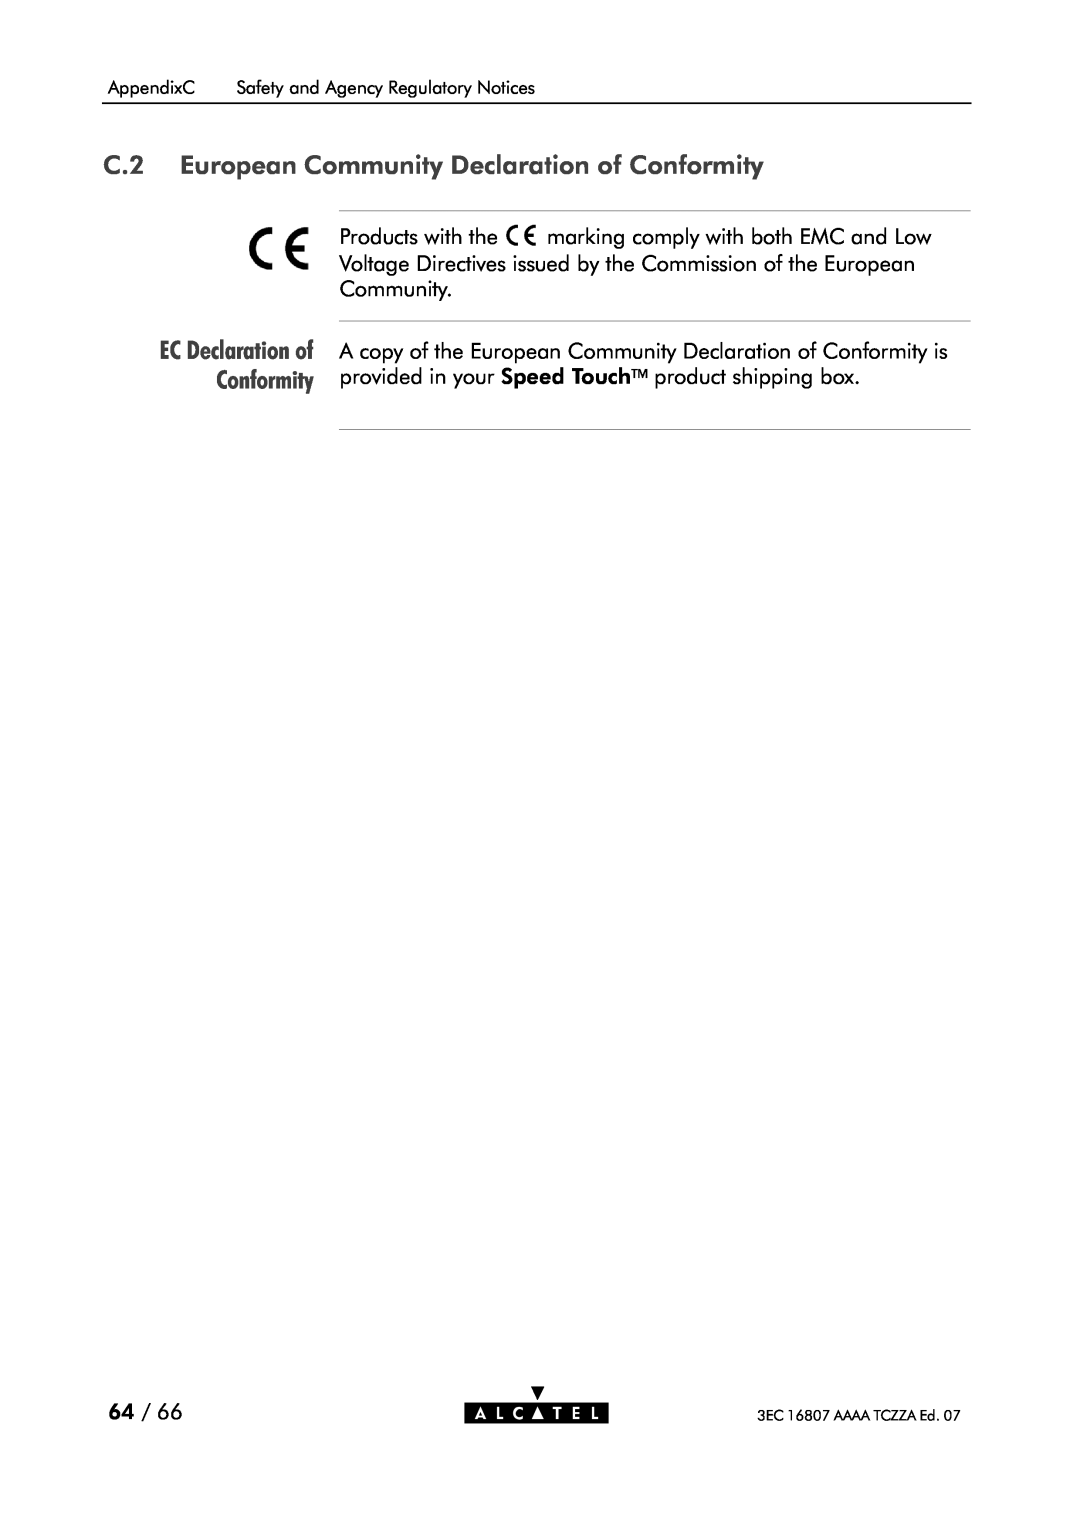 Alcatel Carrier Internetworking Solutions 3EC 16807 AAAA TCZZA ED. 07 C.2 European Community Declaration of Conformity 